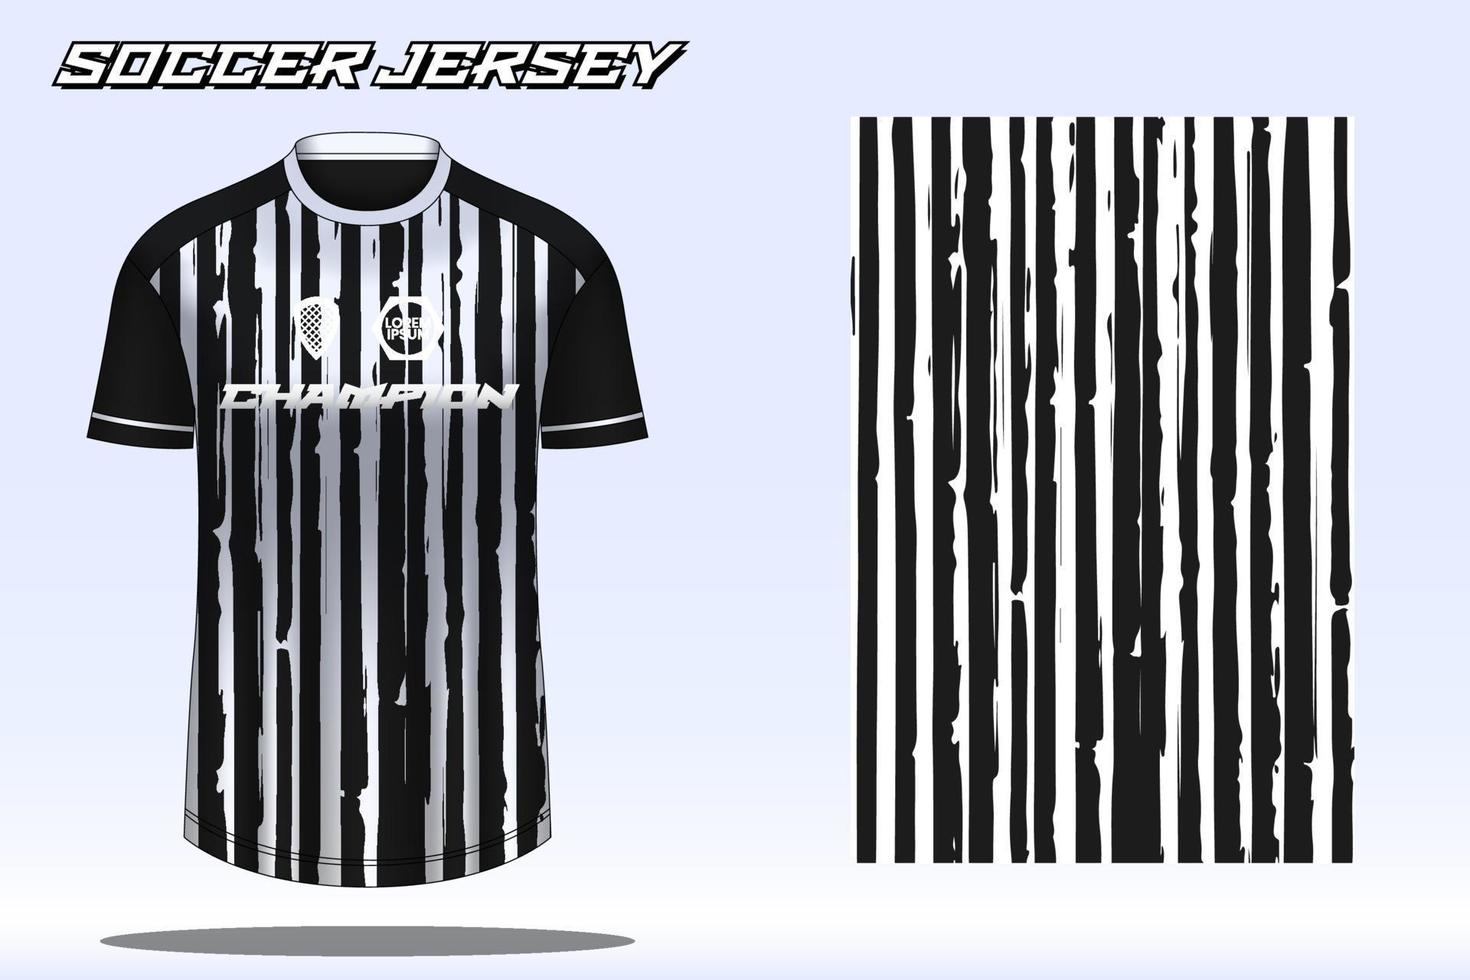 voetbal Jersey sport t-shirt ontwerp mockup voor Amerikaans voetbal club 04 vector